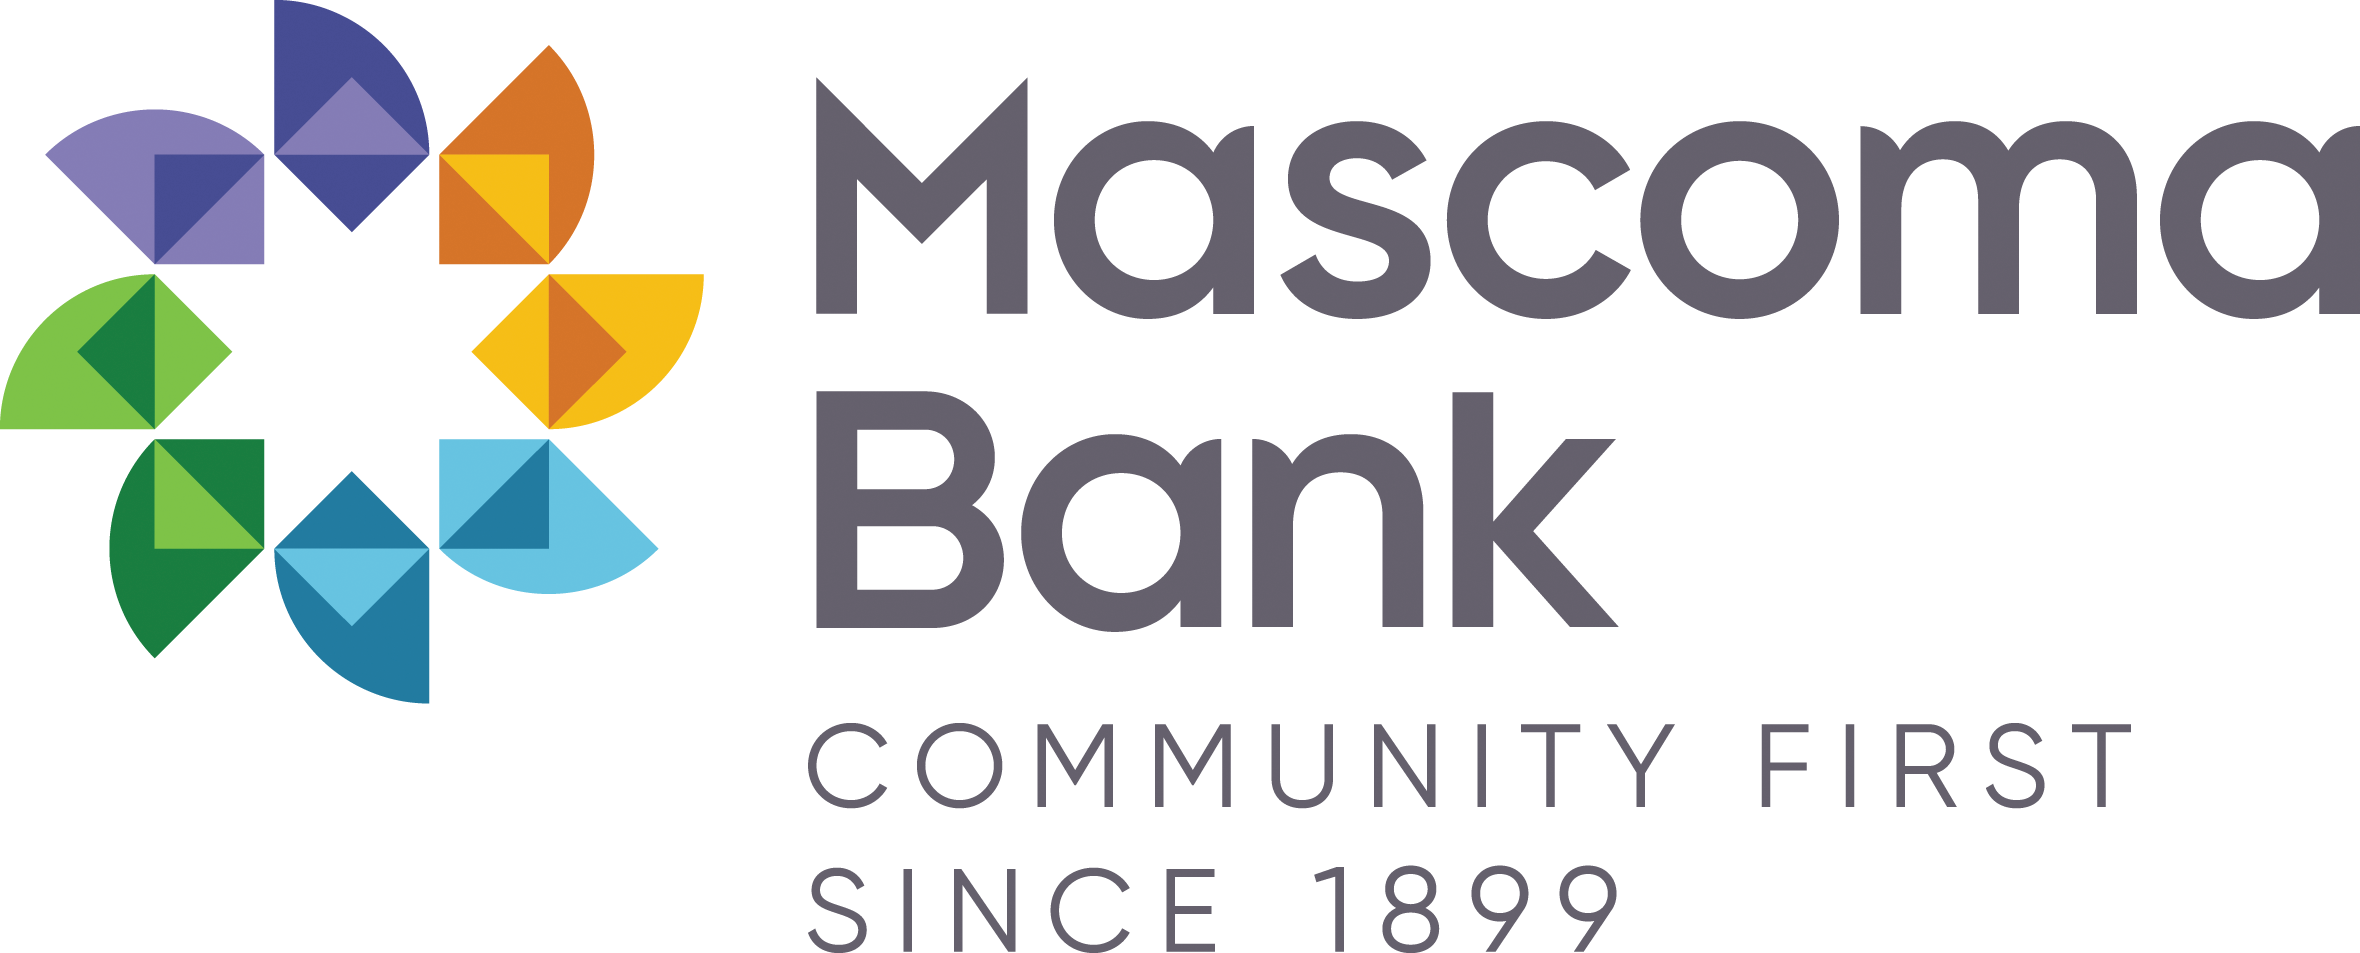 Mascoma Bank